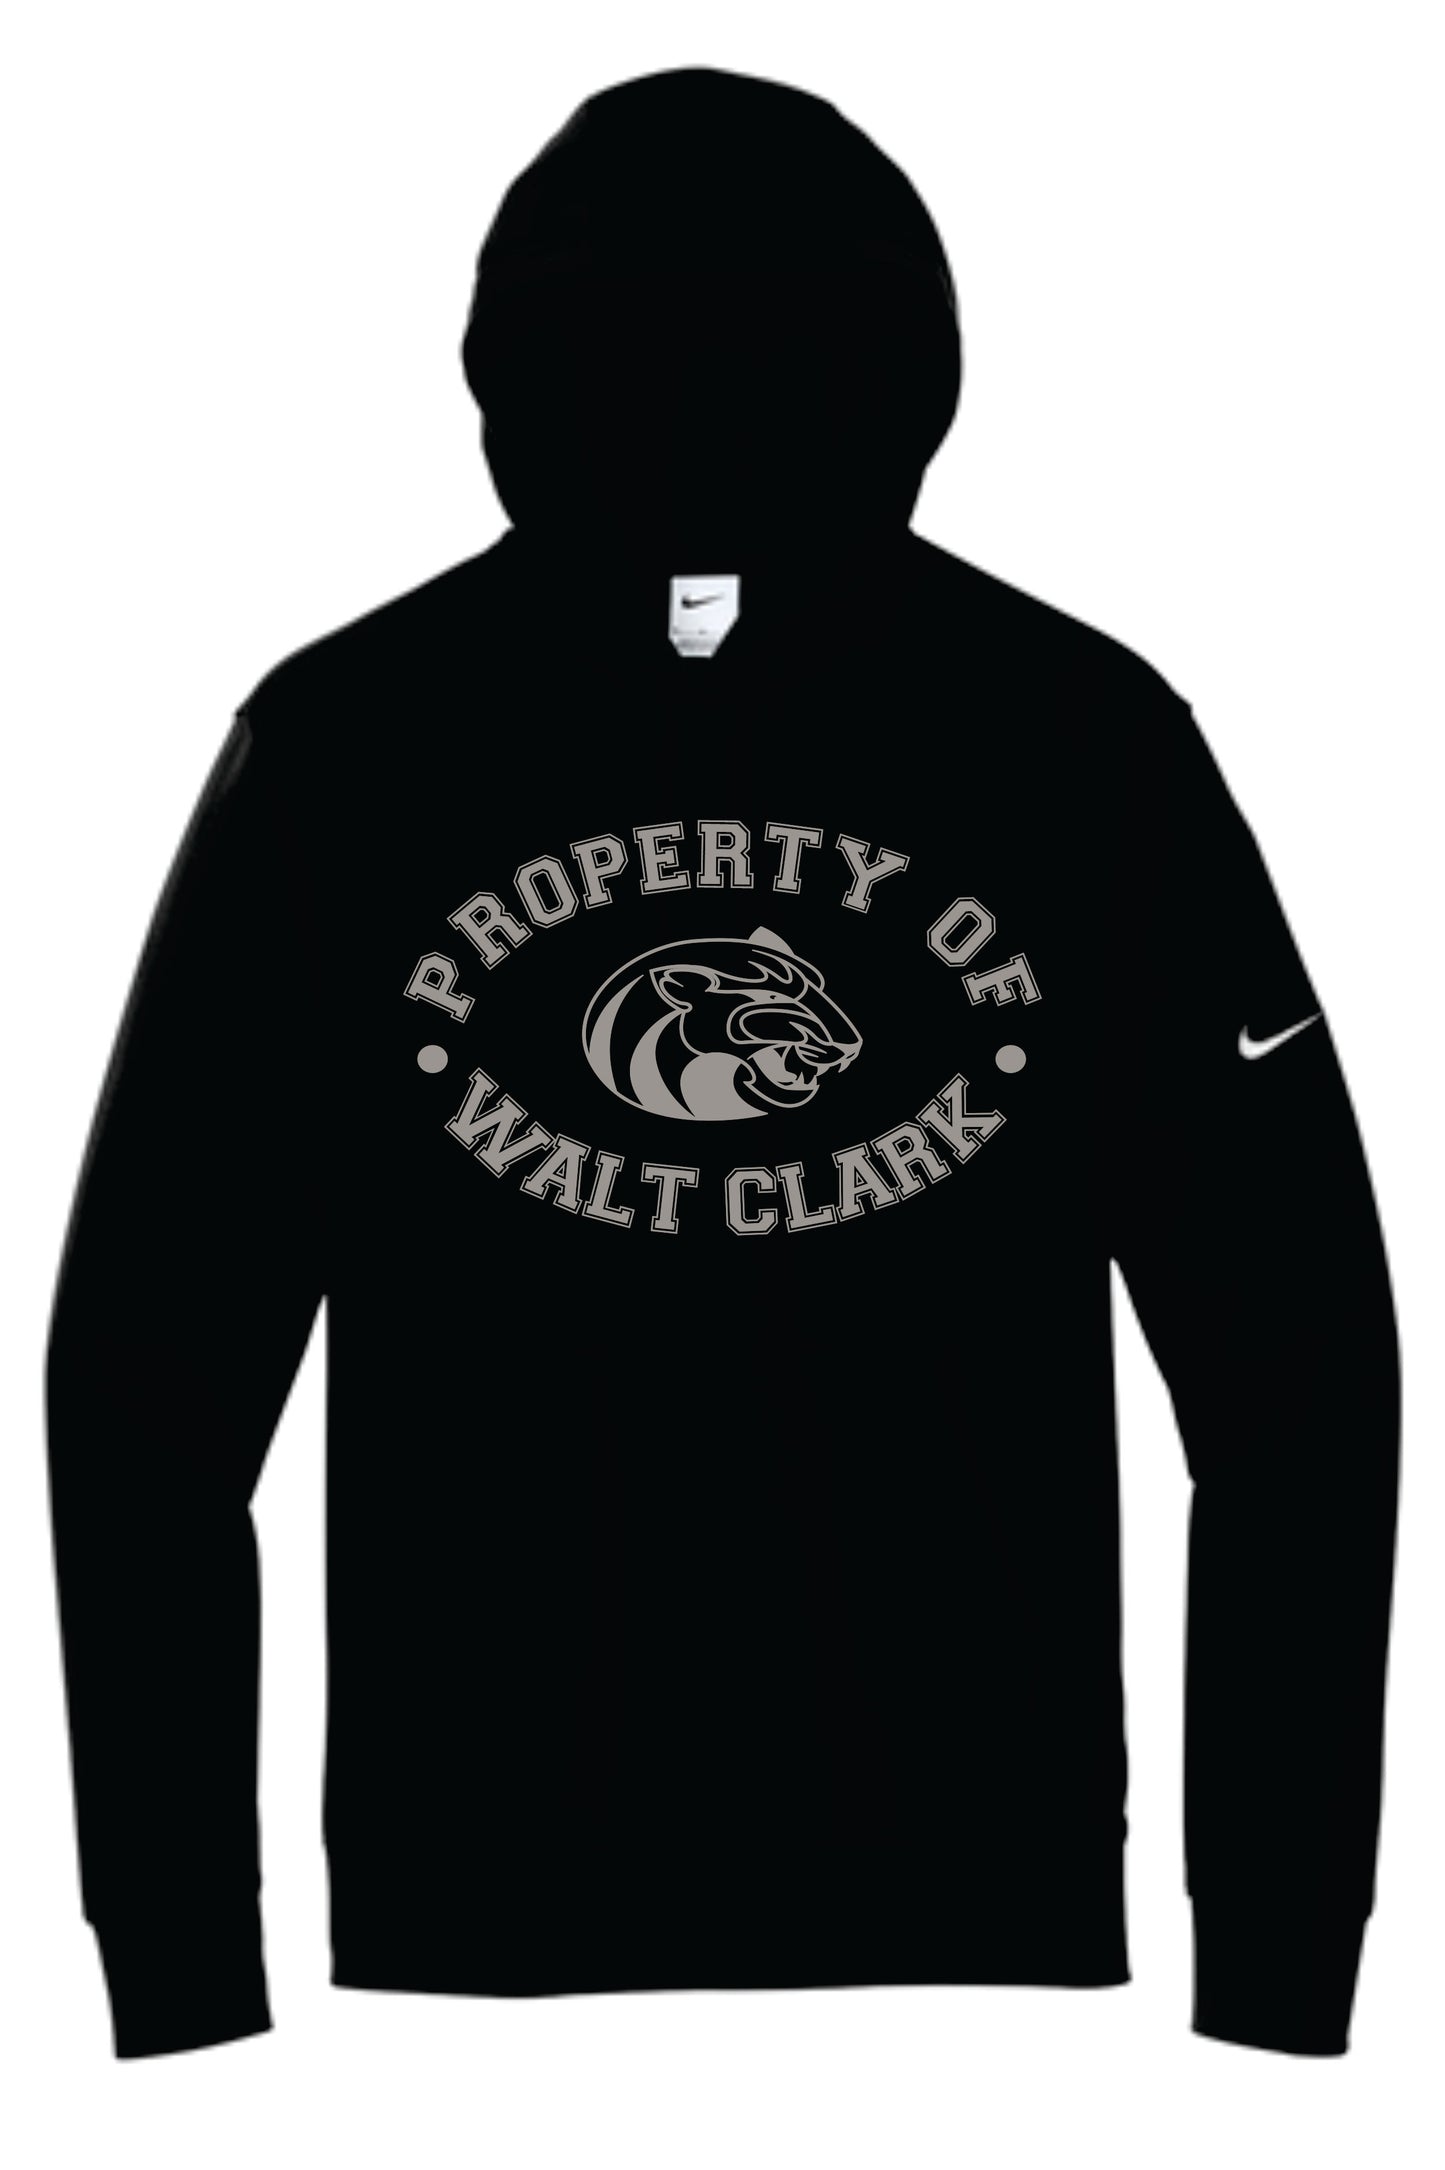 WCMS Property of Walt Clark logo